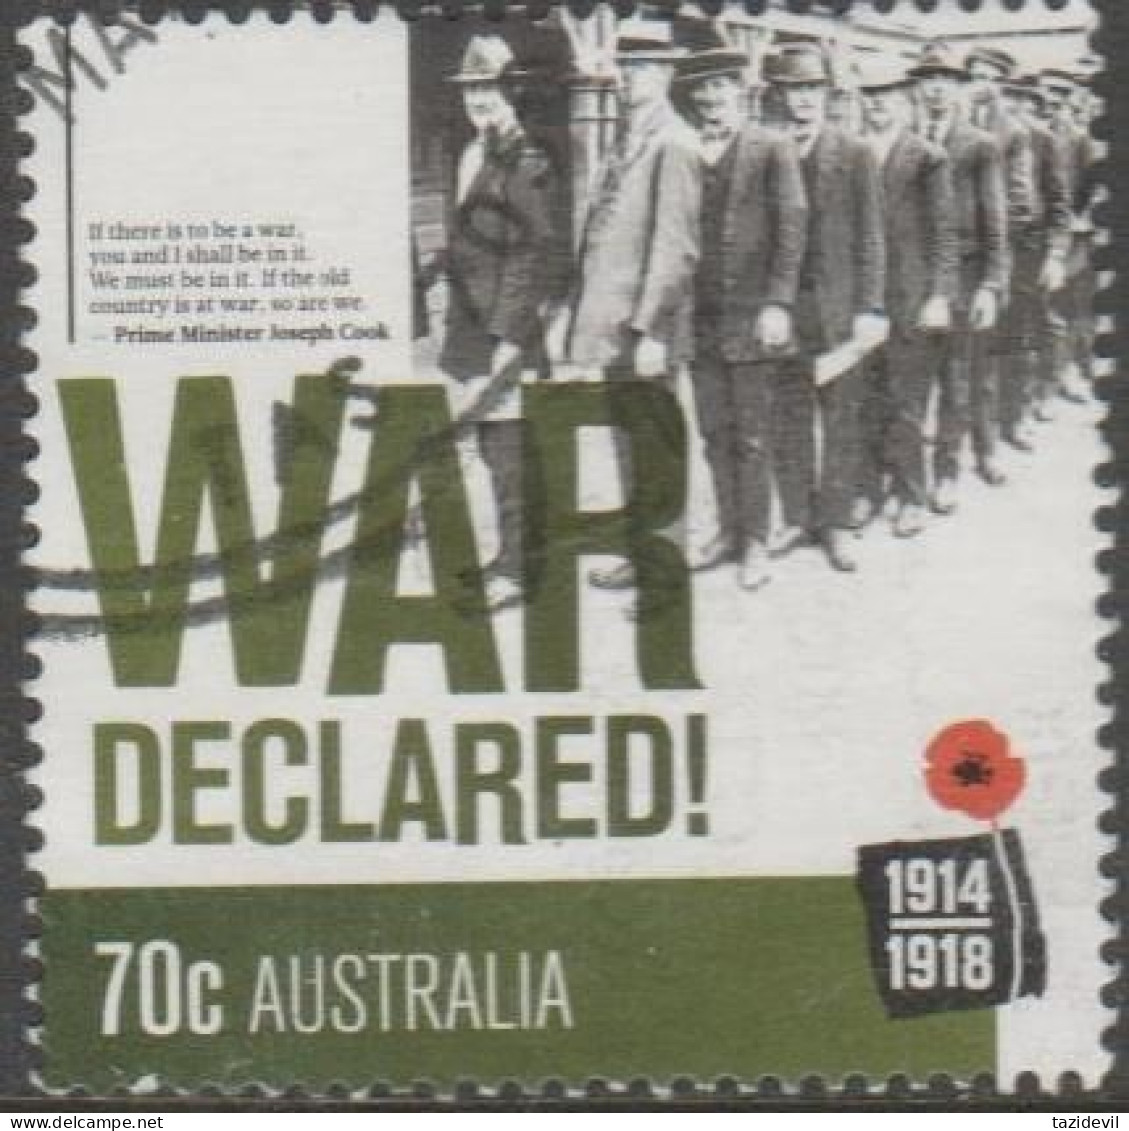 AUSTRALIA - USED - 2014 70c Australian's At War - War Declared - Usados